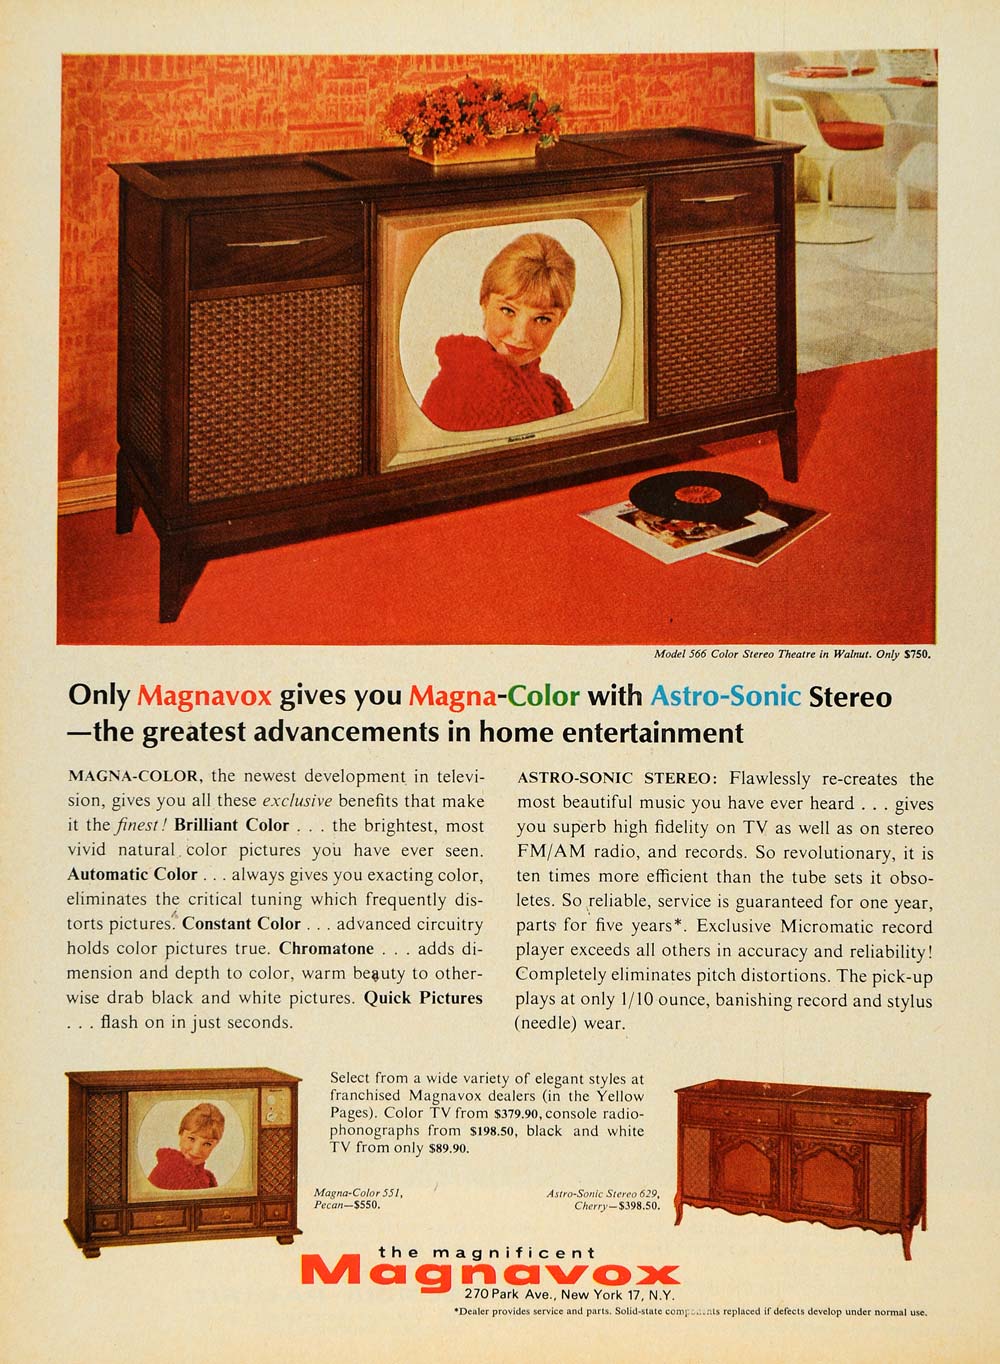 1965 Ad Magnavox Model 566 Color Stereo Theatre TV - ORIGINAL ADVERTISING TM6